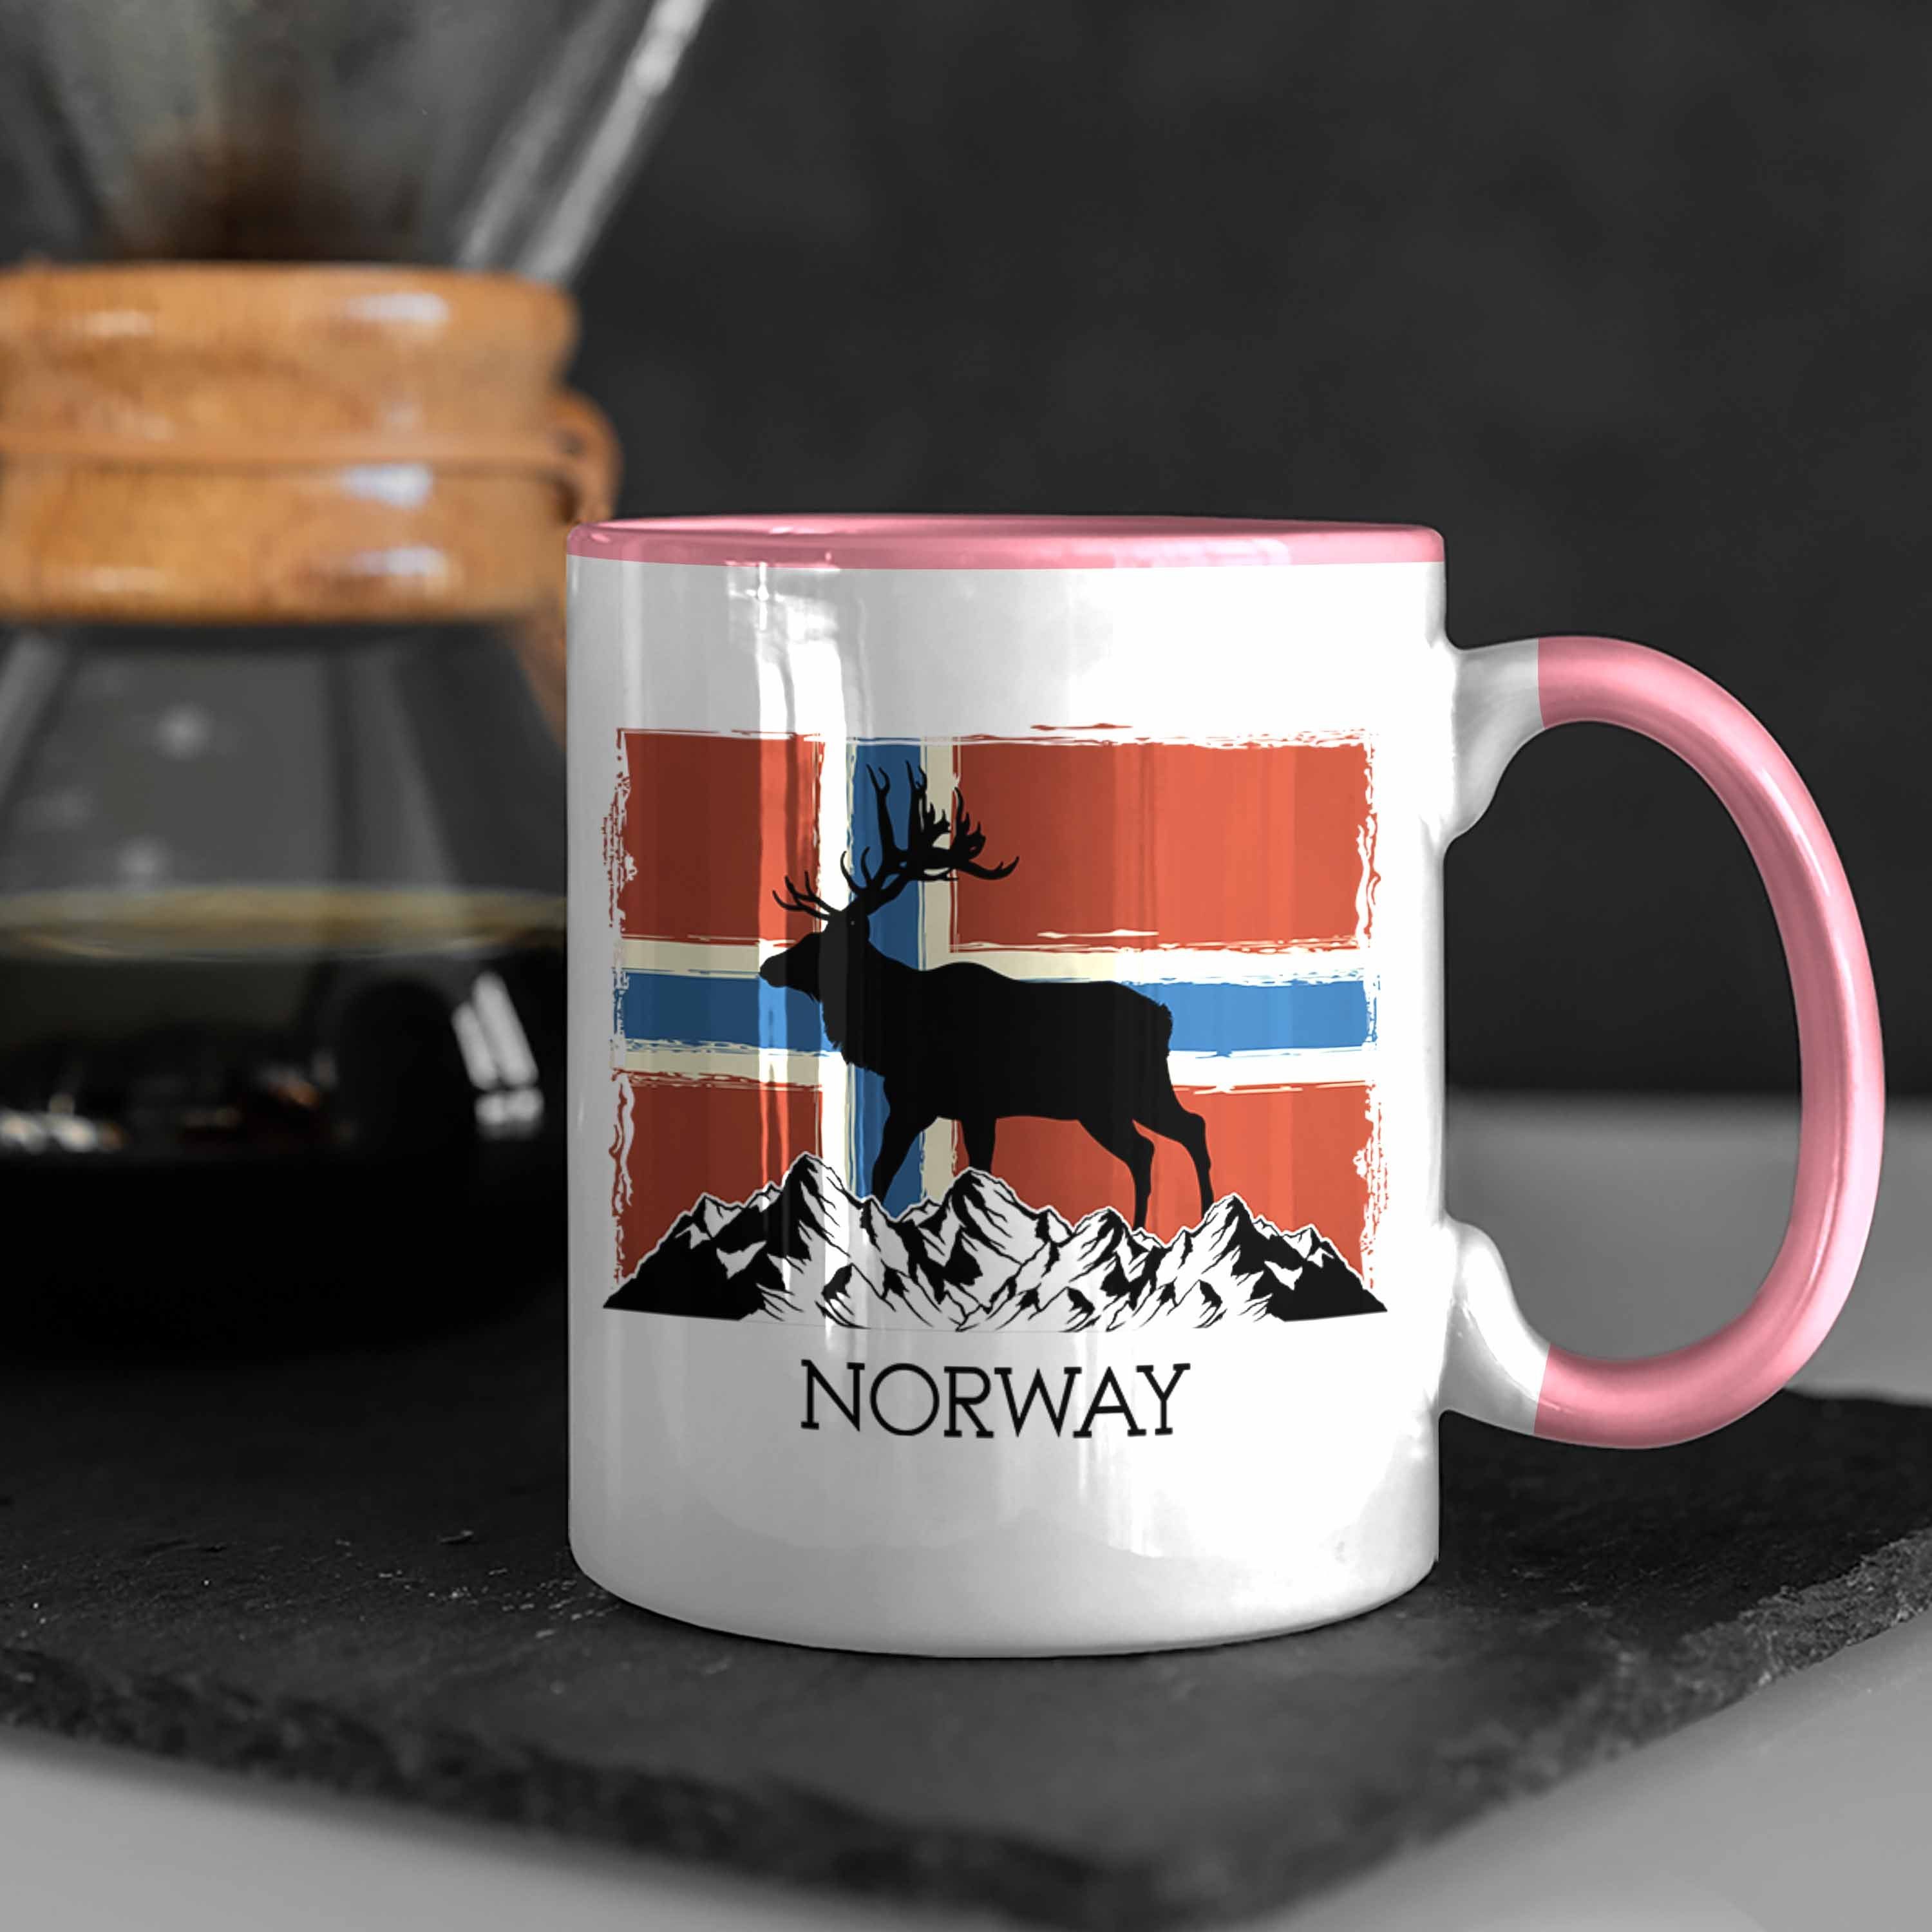 Trendation Norway - Nordkap Trendation Flagge Geschenke Elch Tasse Norwegen Tasse Rosa